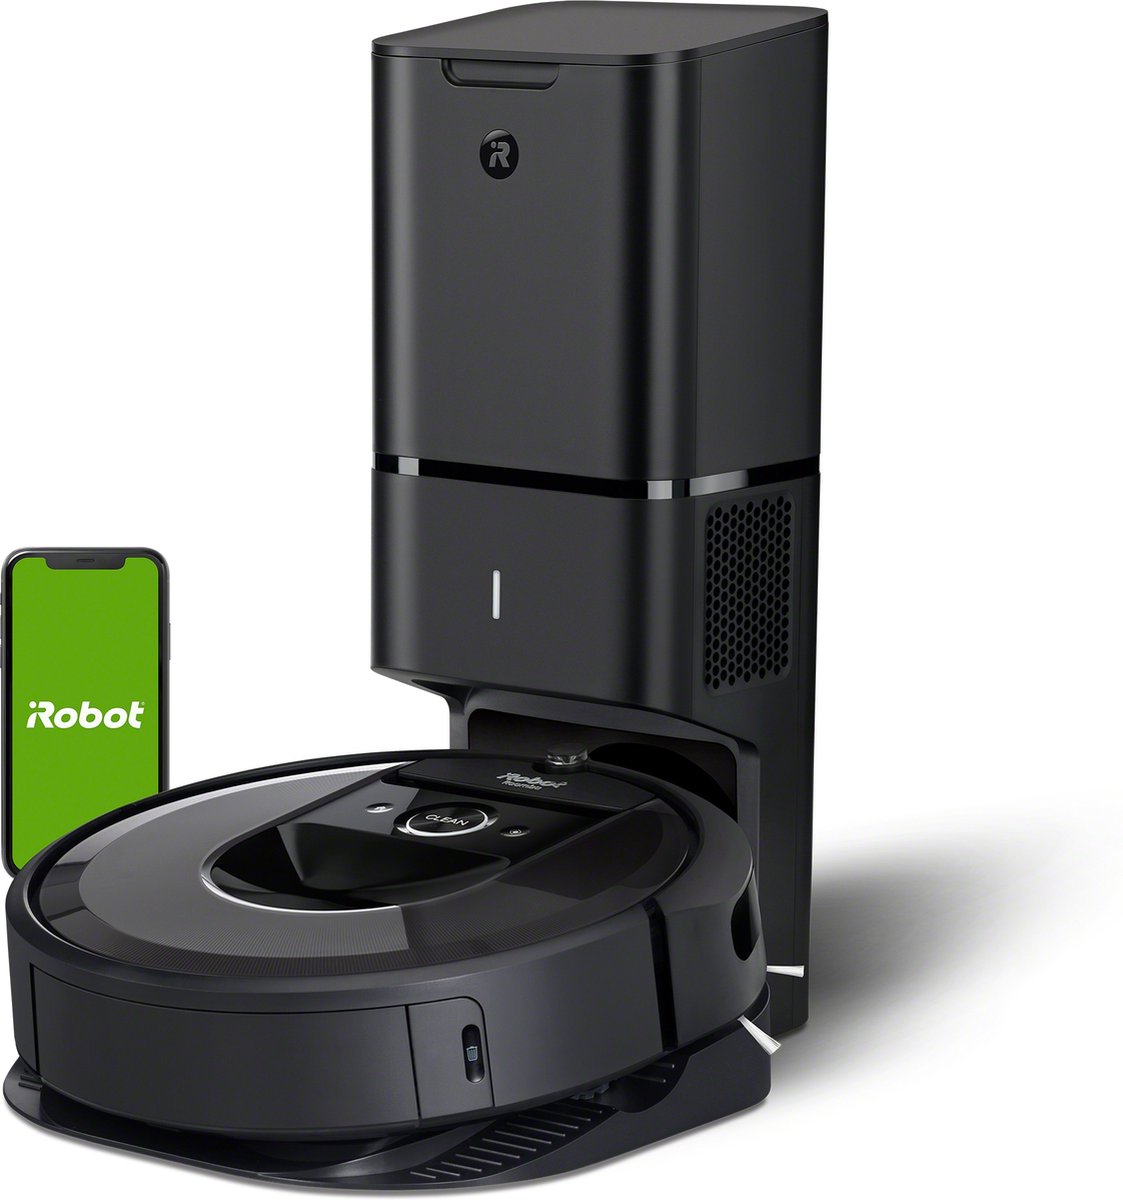 Irobot robotstofzuiger Roomba i7+ - Zwart